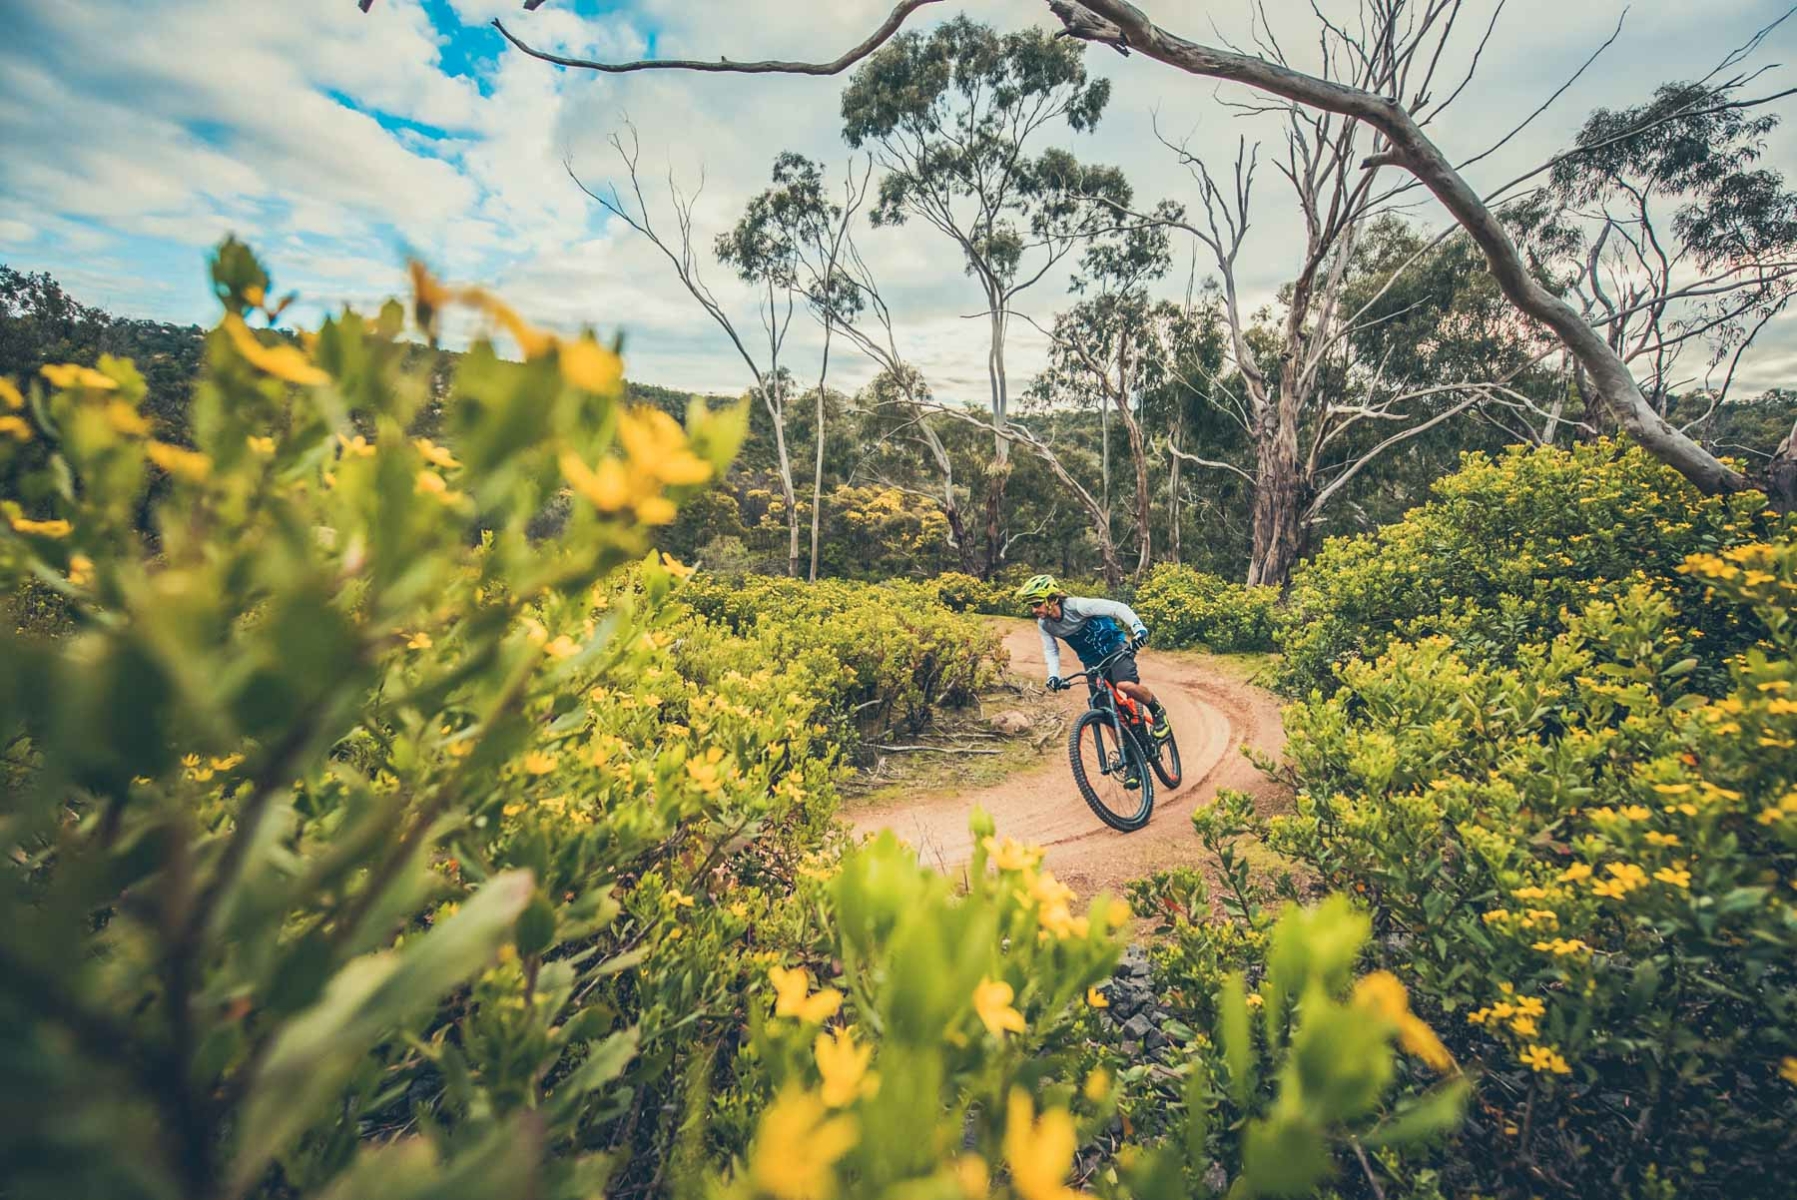 Best mountain bike trails Melbourne: You Yangs mountain bike park